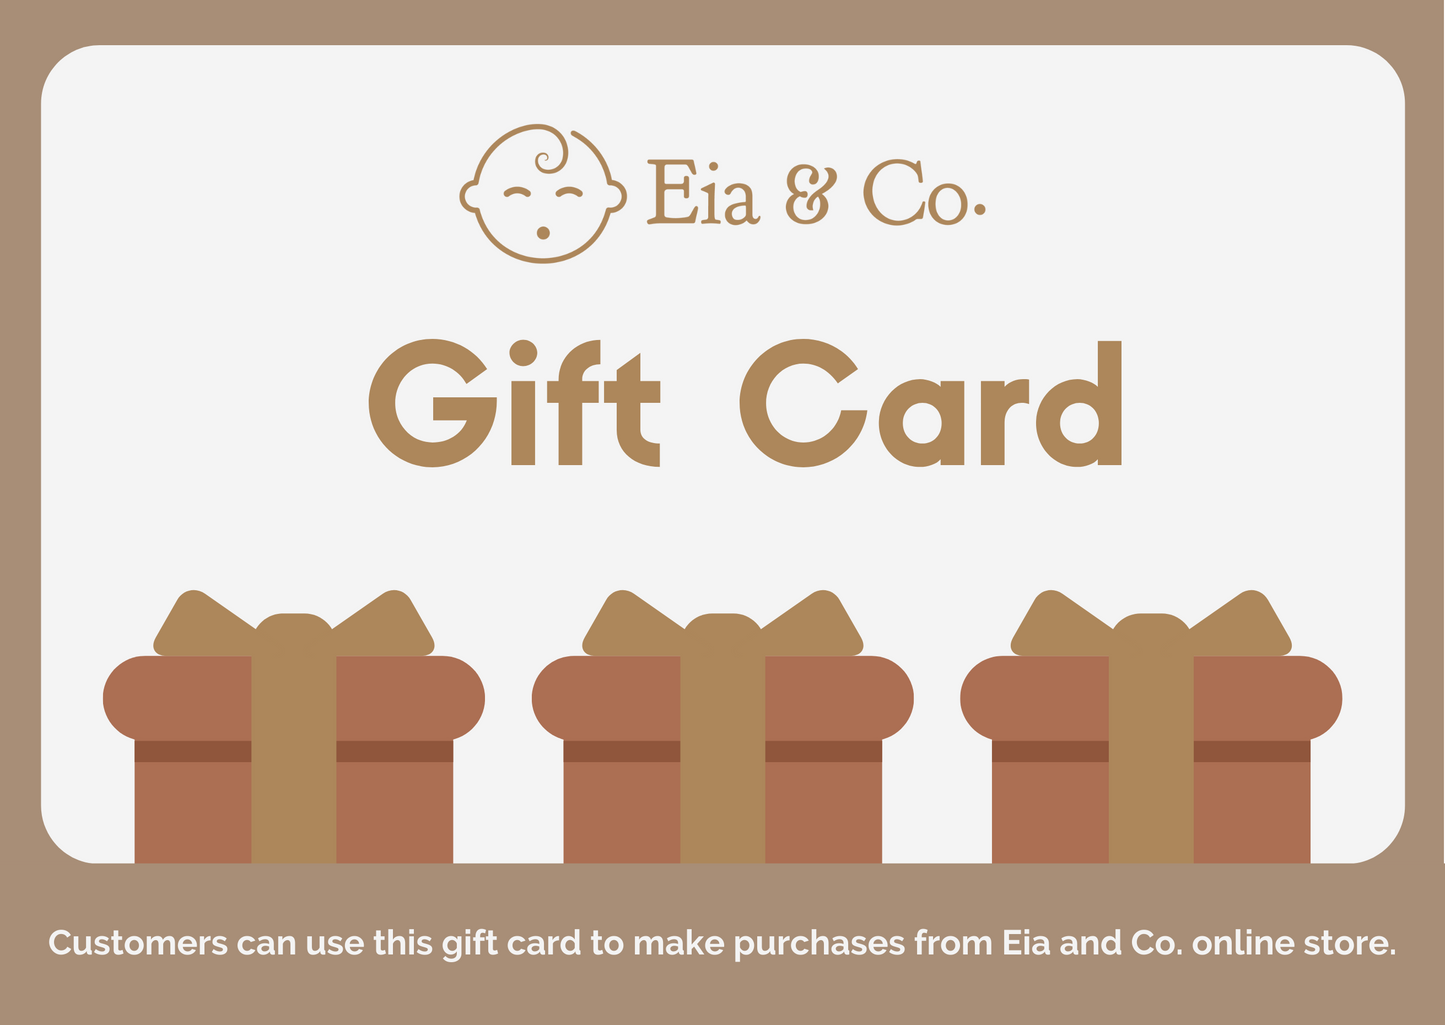 Eia & Co. Gift Card